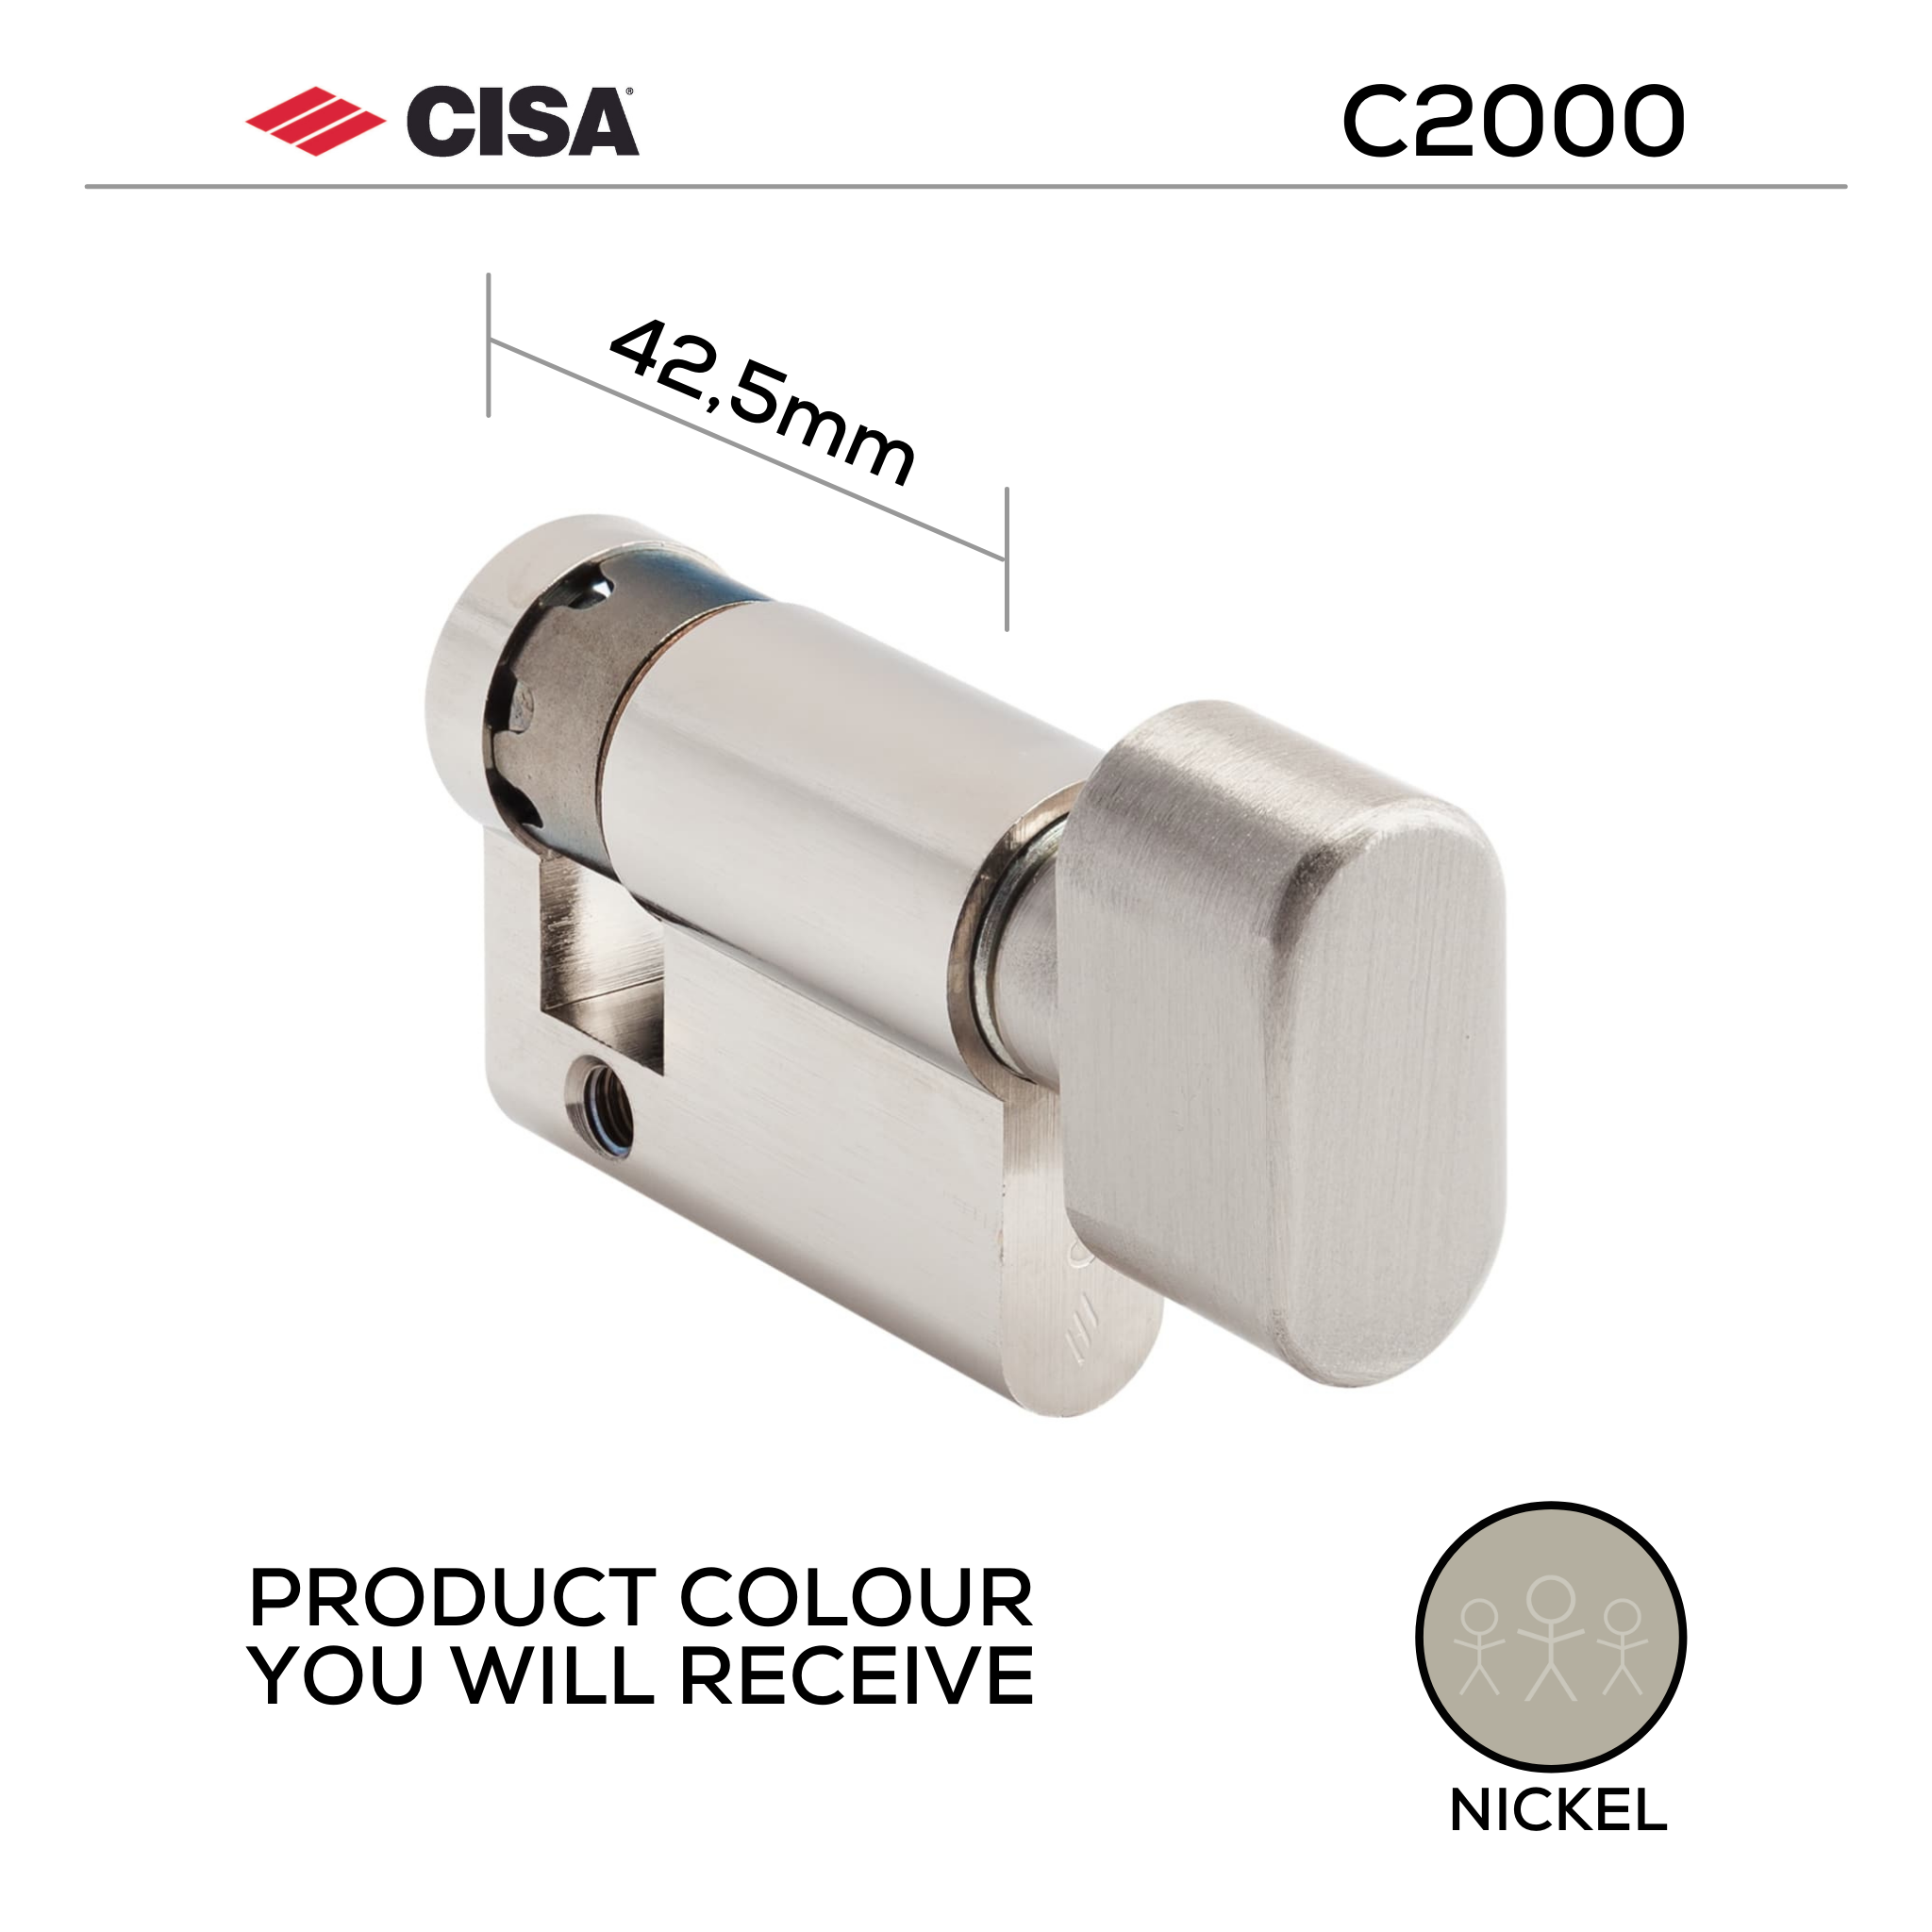 09090-02-12-KD, 42,5mm - 32.5/10, Oval Half (Single Cylinder), C2000, Thumbturn, Keyed to Differ (Standard), Nickel, CISA